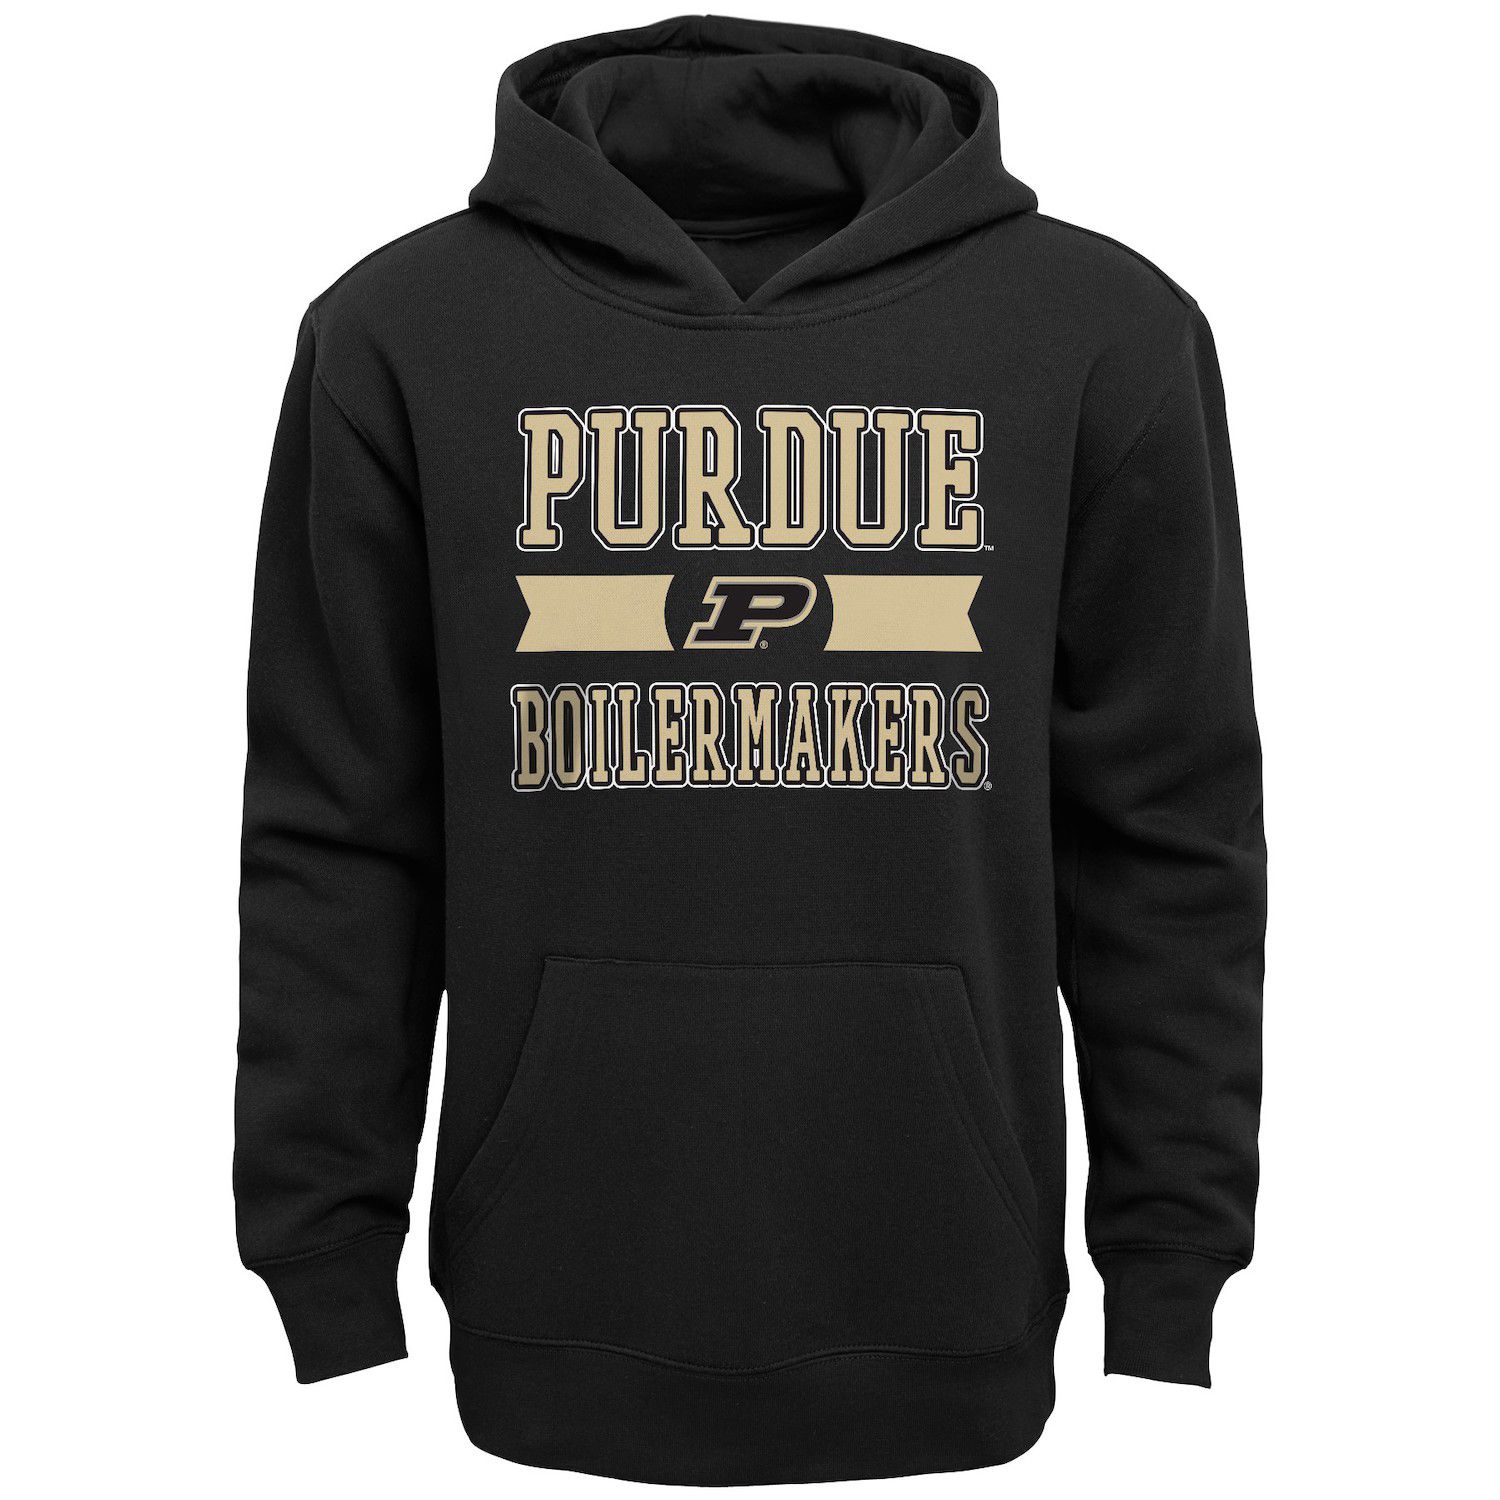 Image for Unbranded Boys 4-7 Purdue Boilermakers Behold Pride Hoodie at Kohl's.